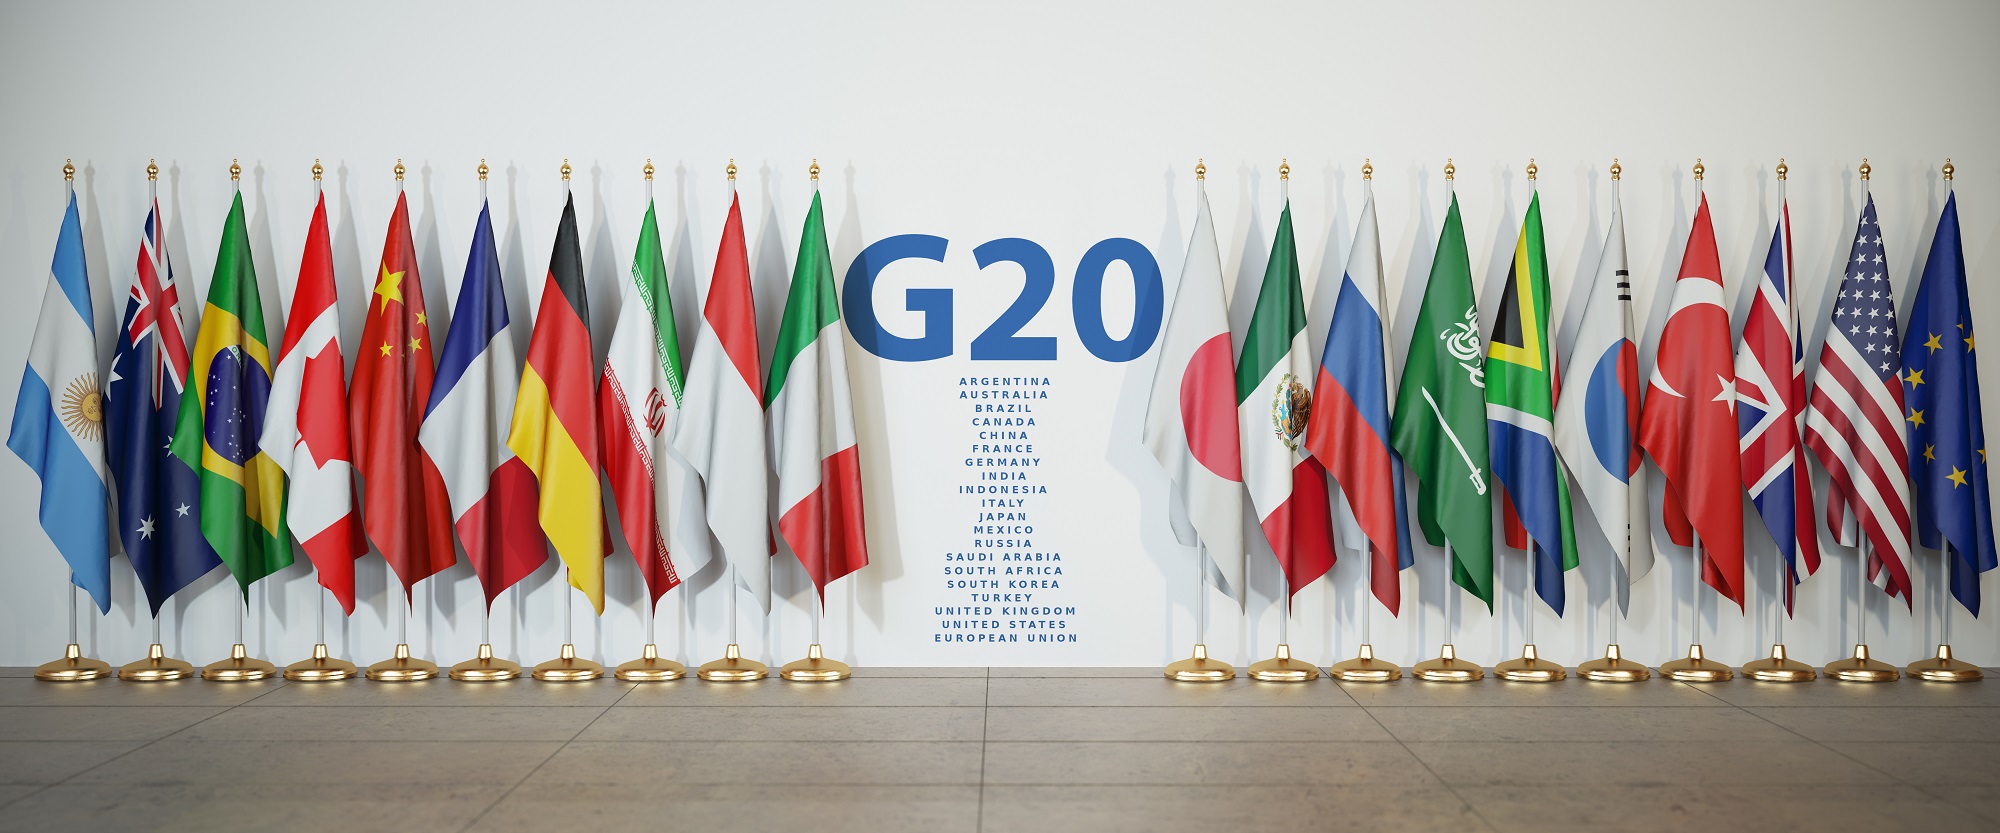 Flagi uczestników G20, fot. Maxx-Studio, Shutterstock.com